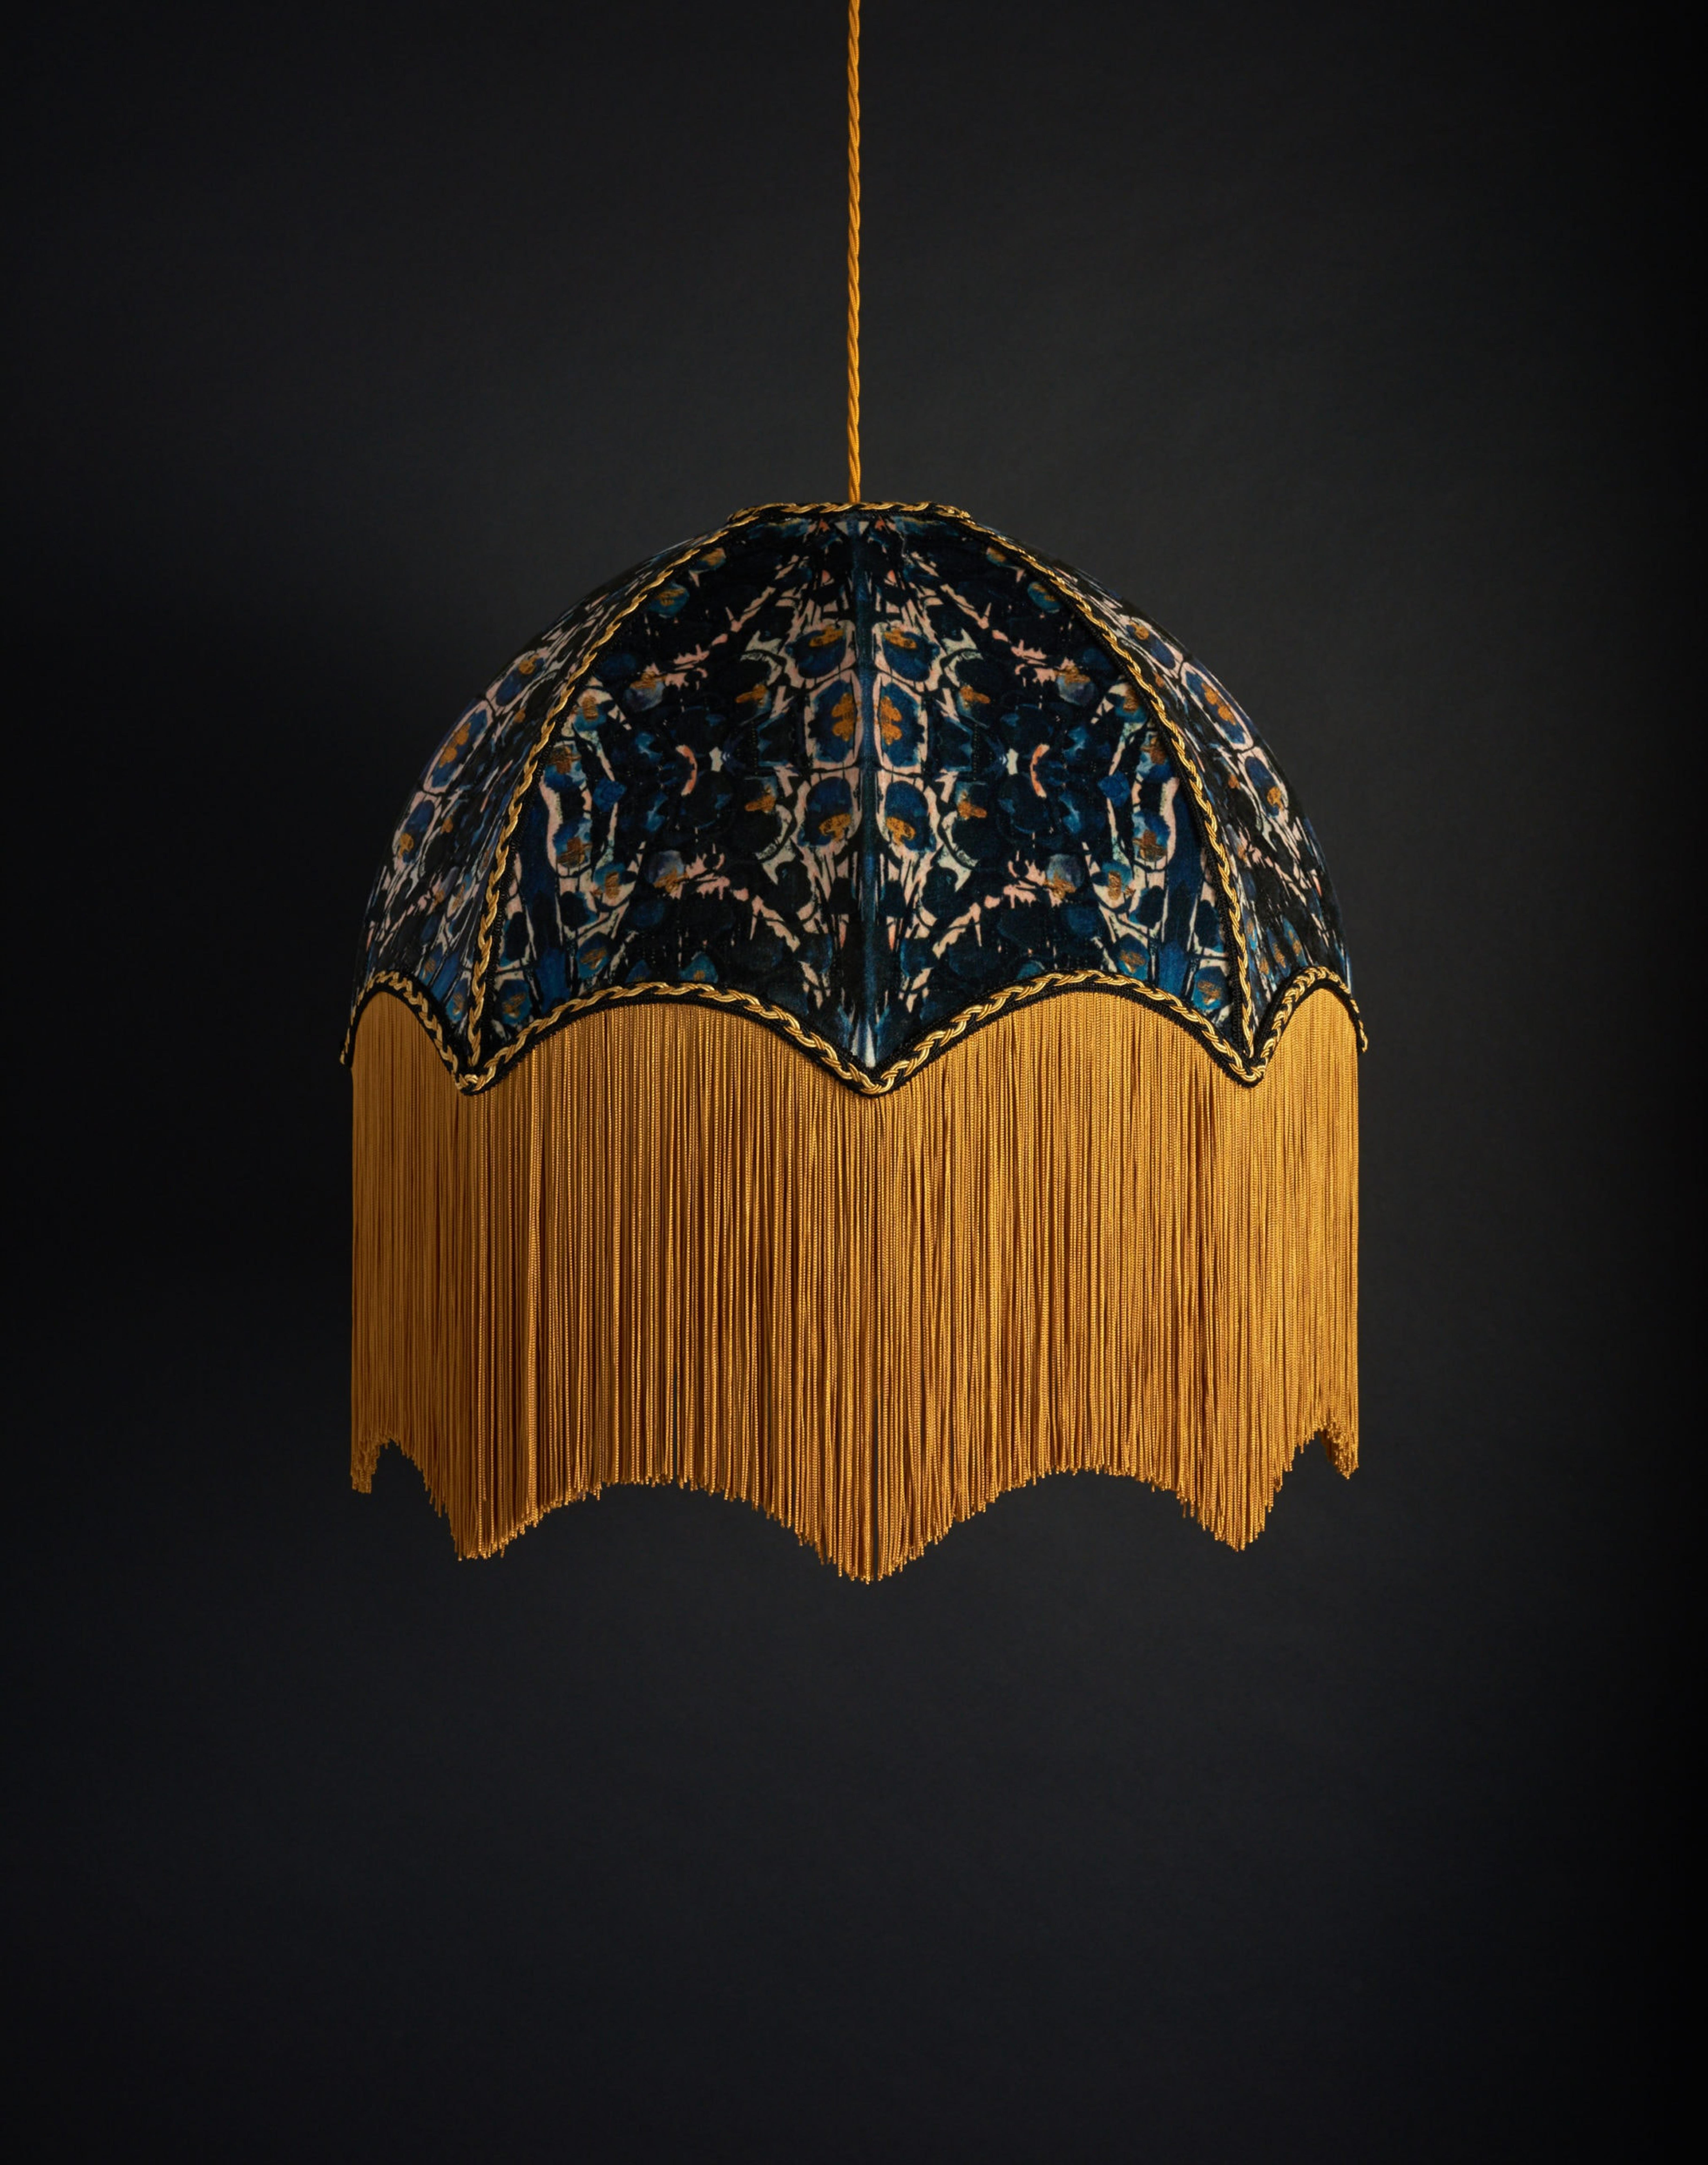 lampshades with fringe